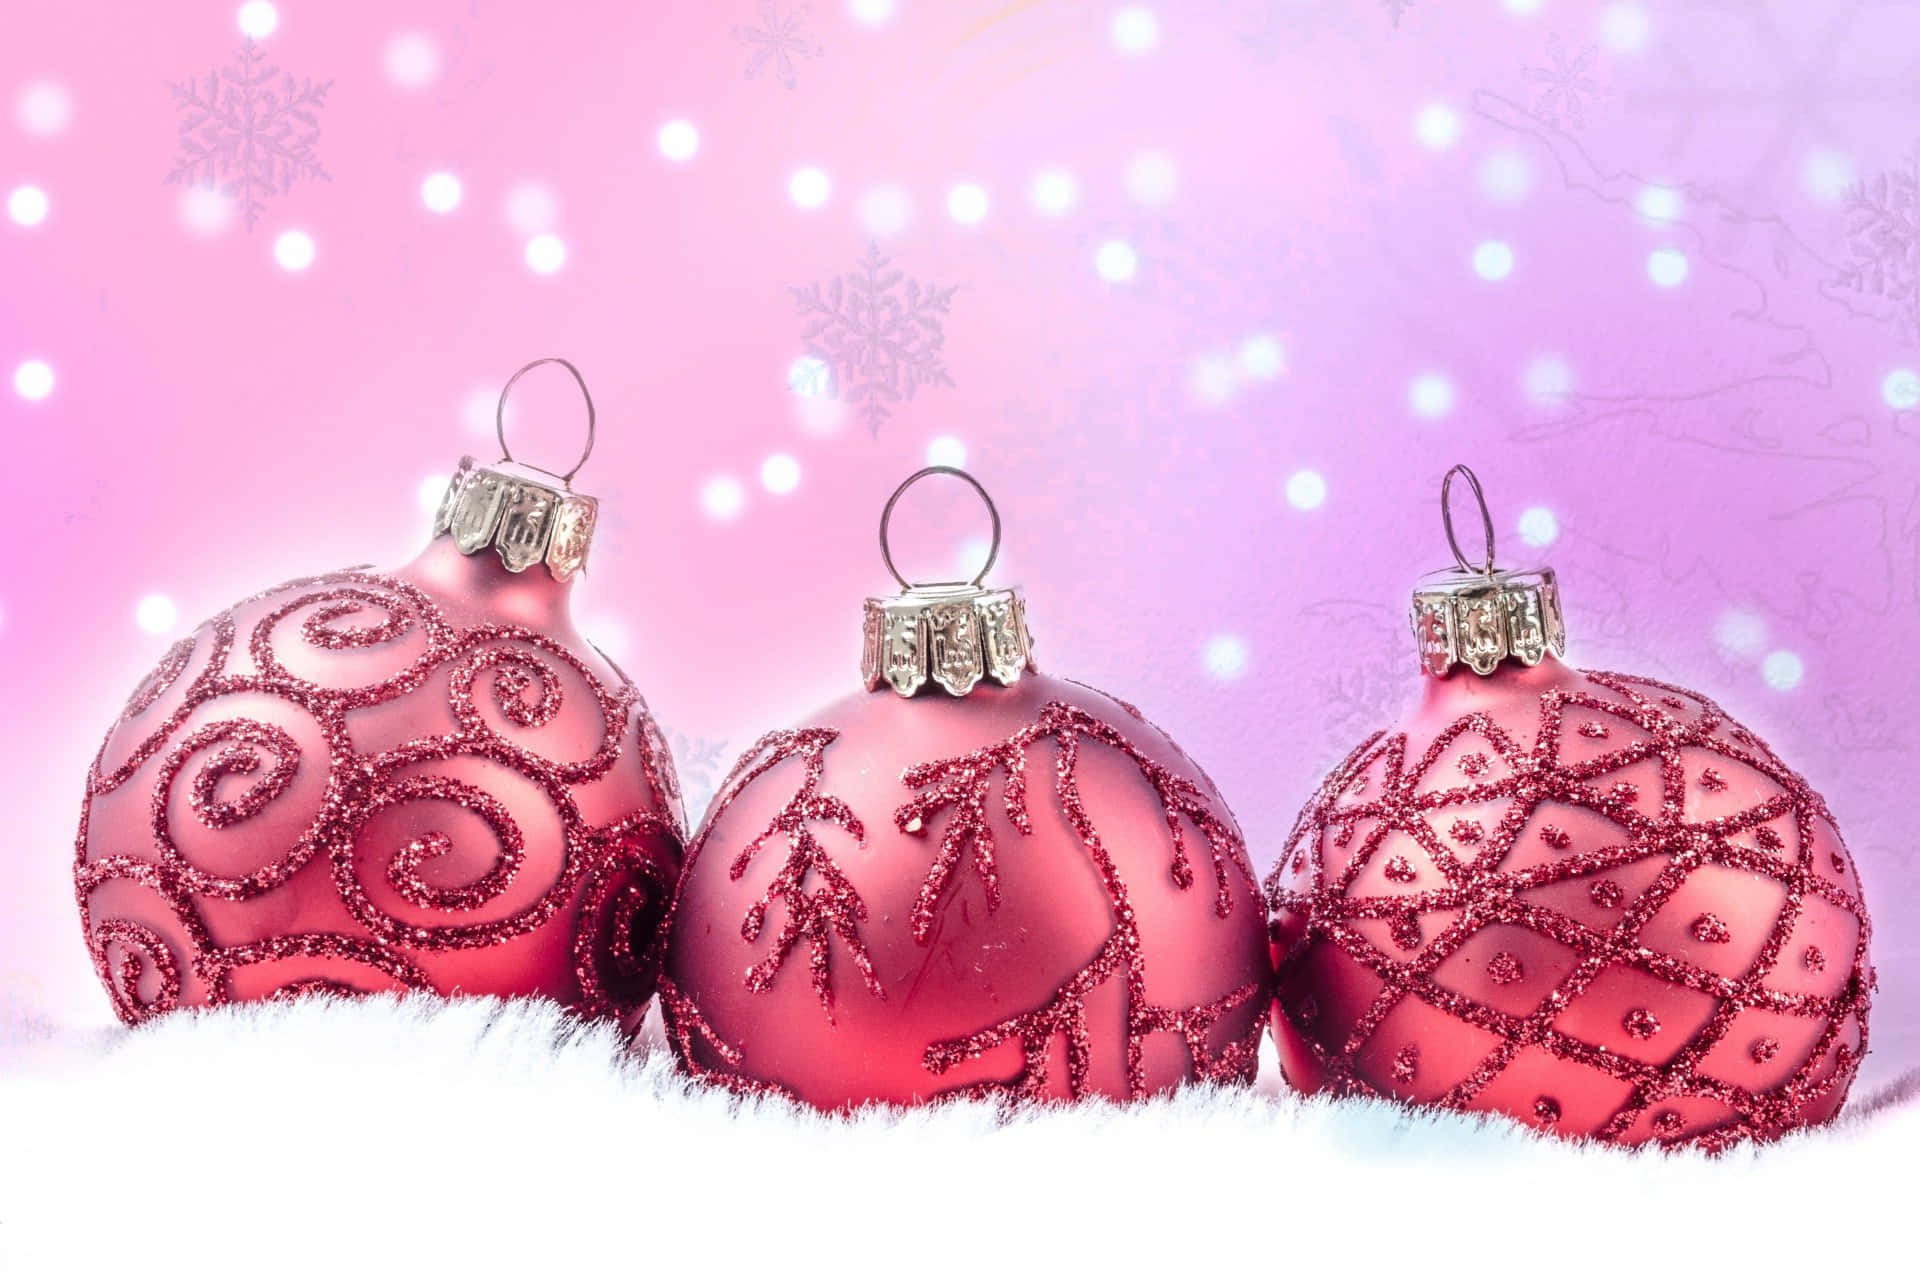 Fejr jul i en festlig pink verden. Wallpaper